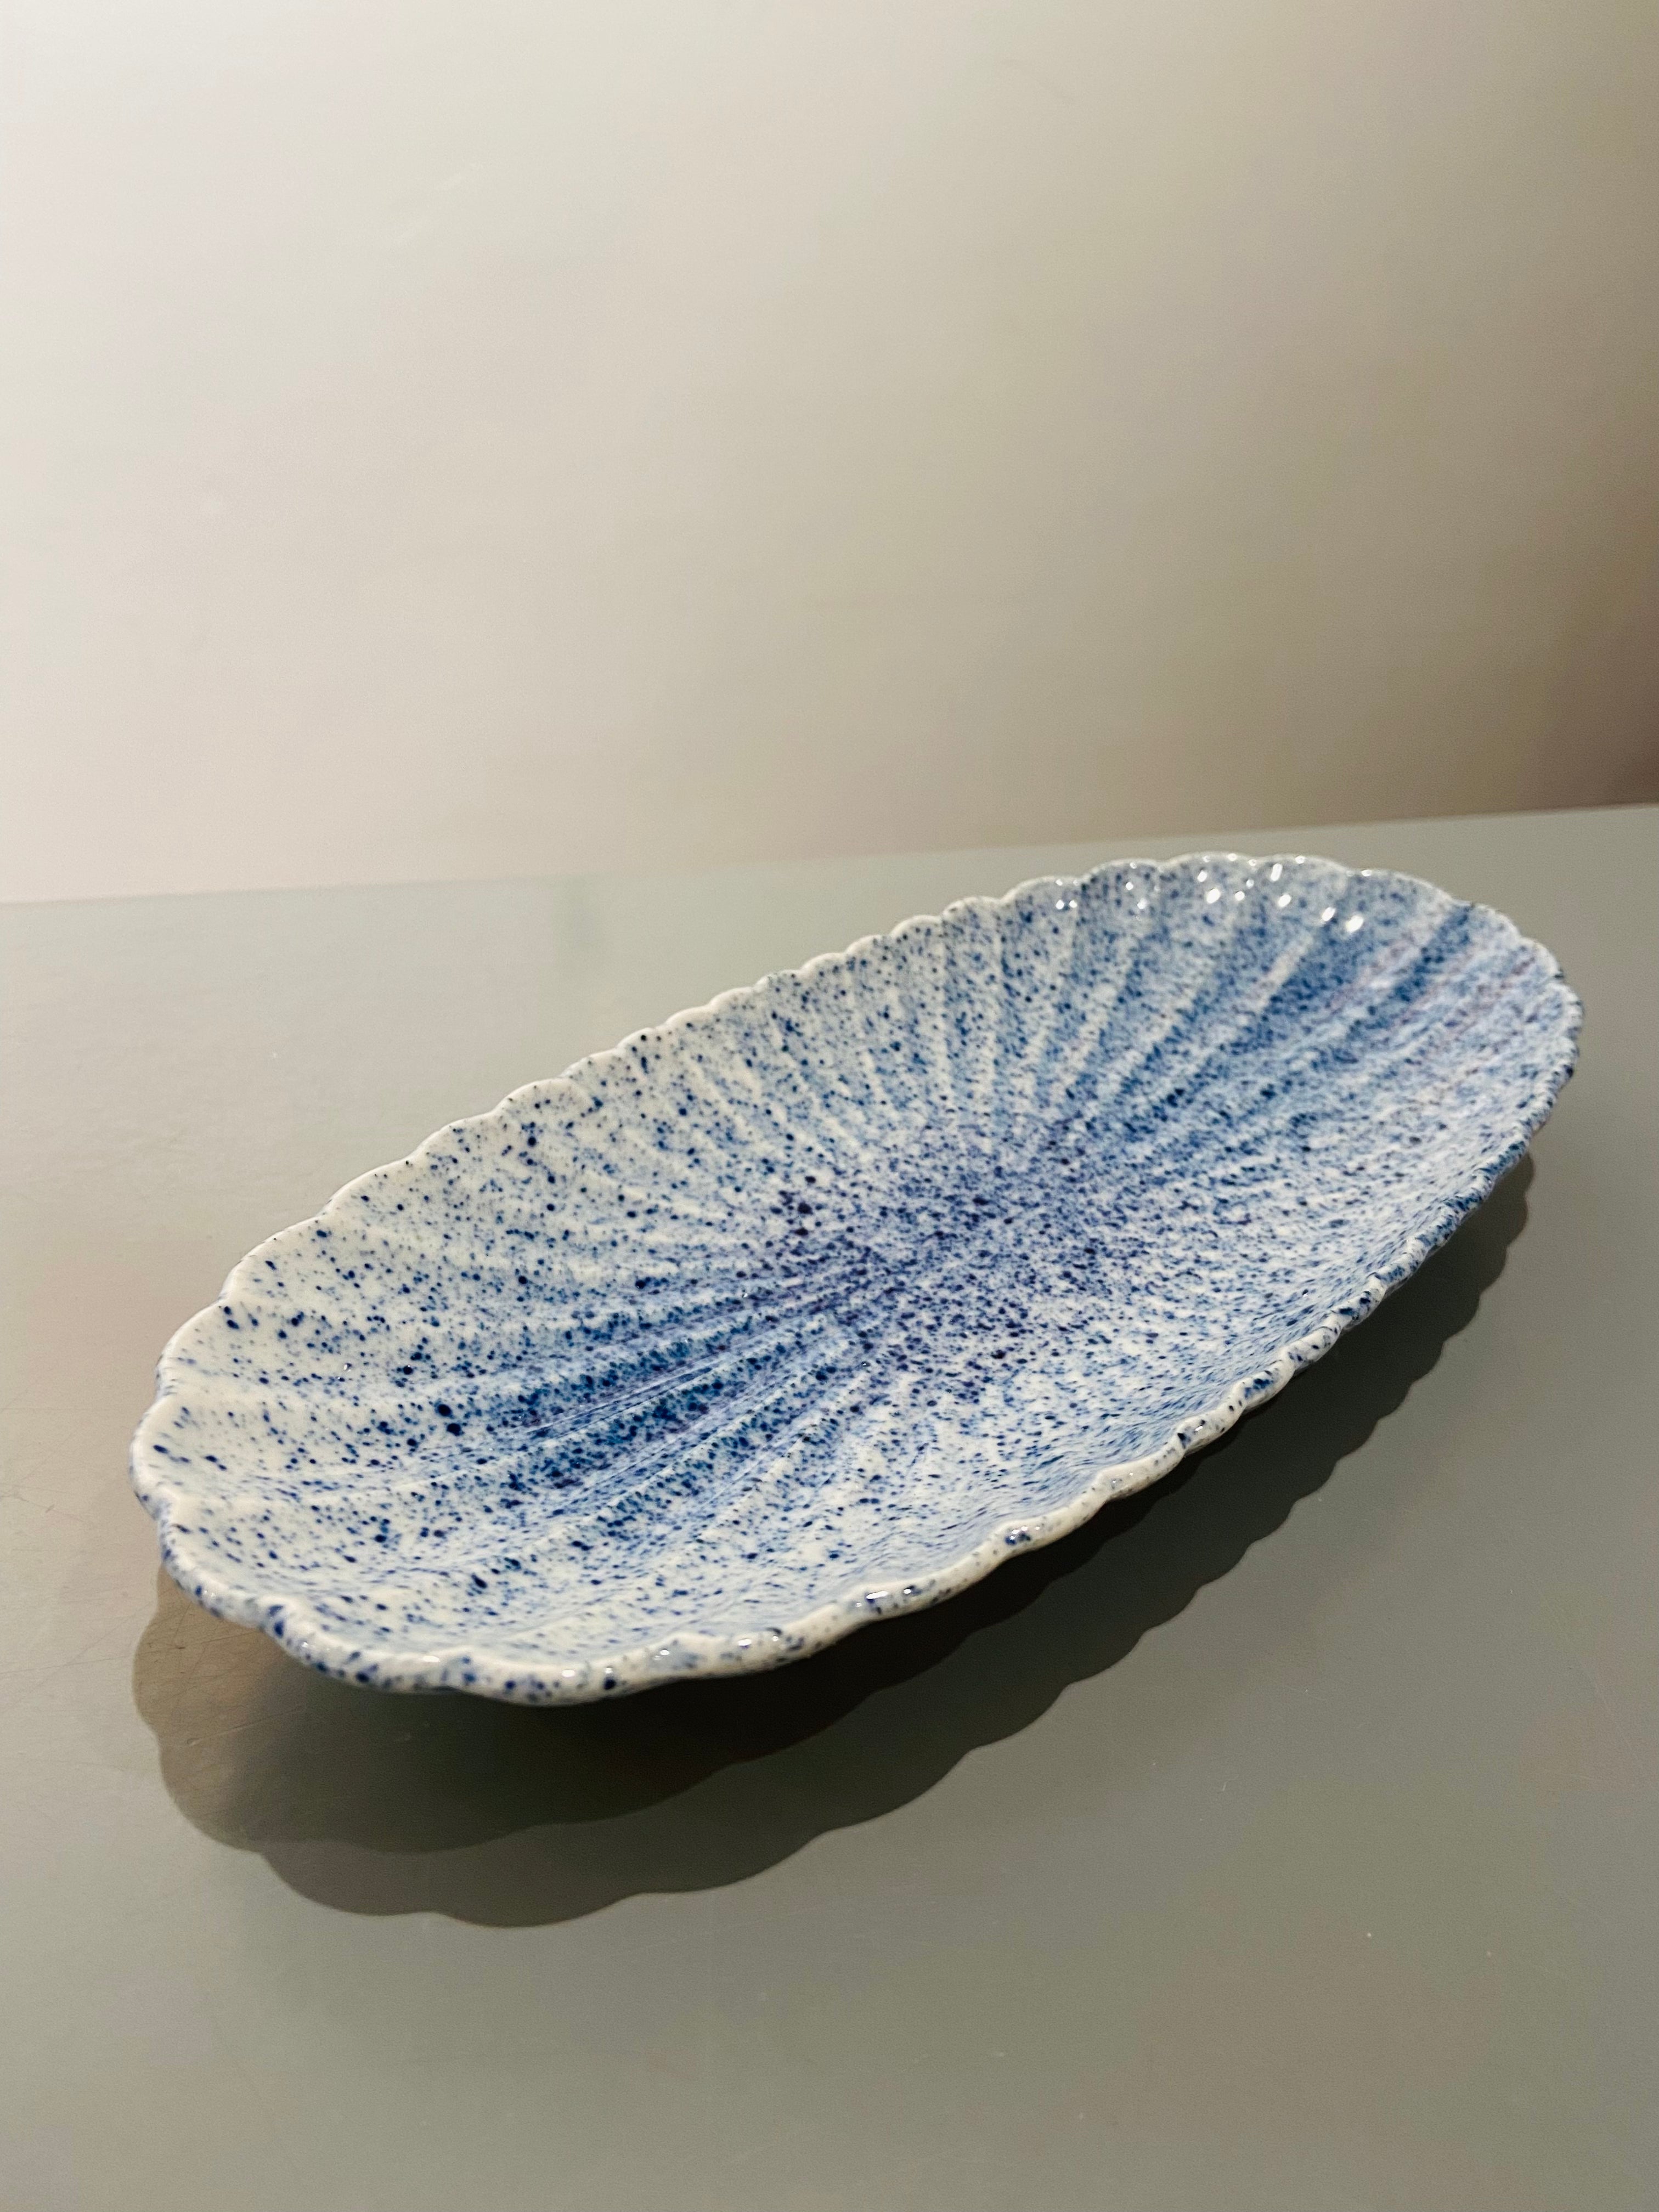 Oval flower dish with blue splash